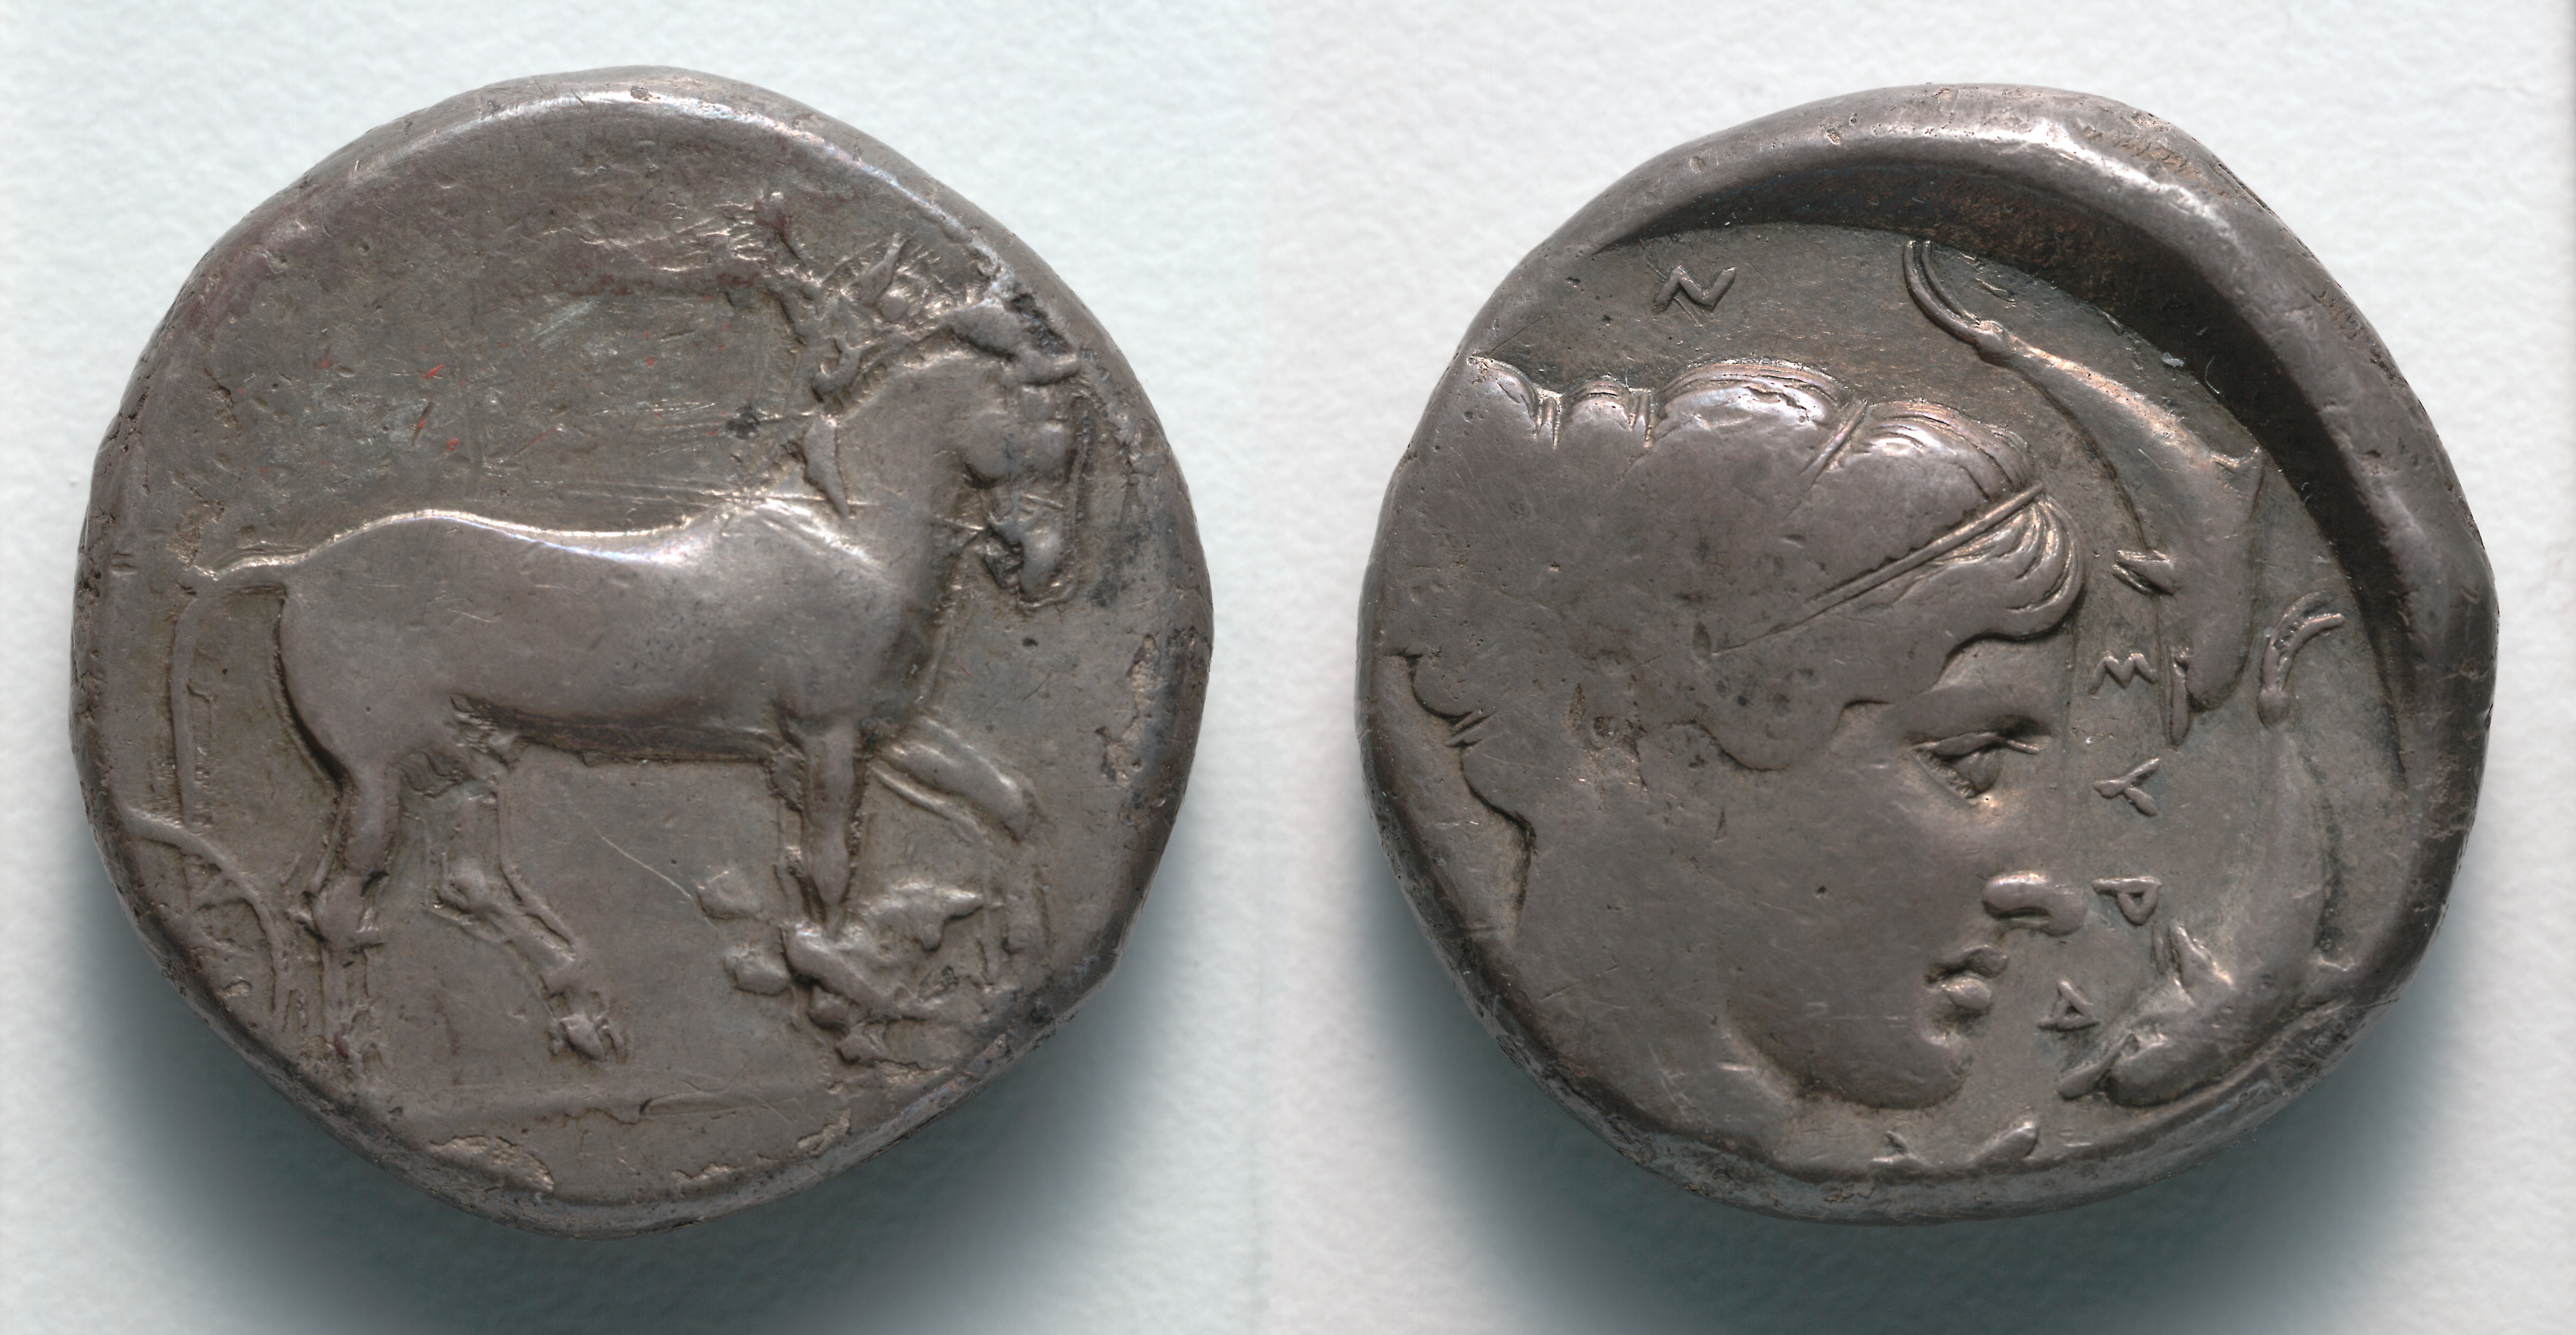 Tetradrachm: Quadriga (obverse); Head of Arethousa (reverse)